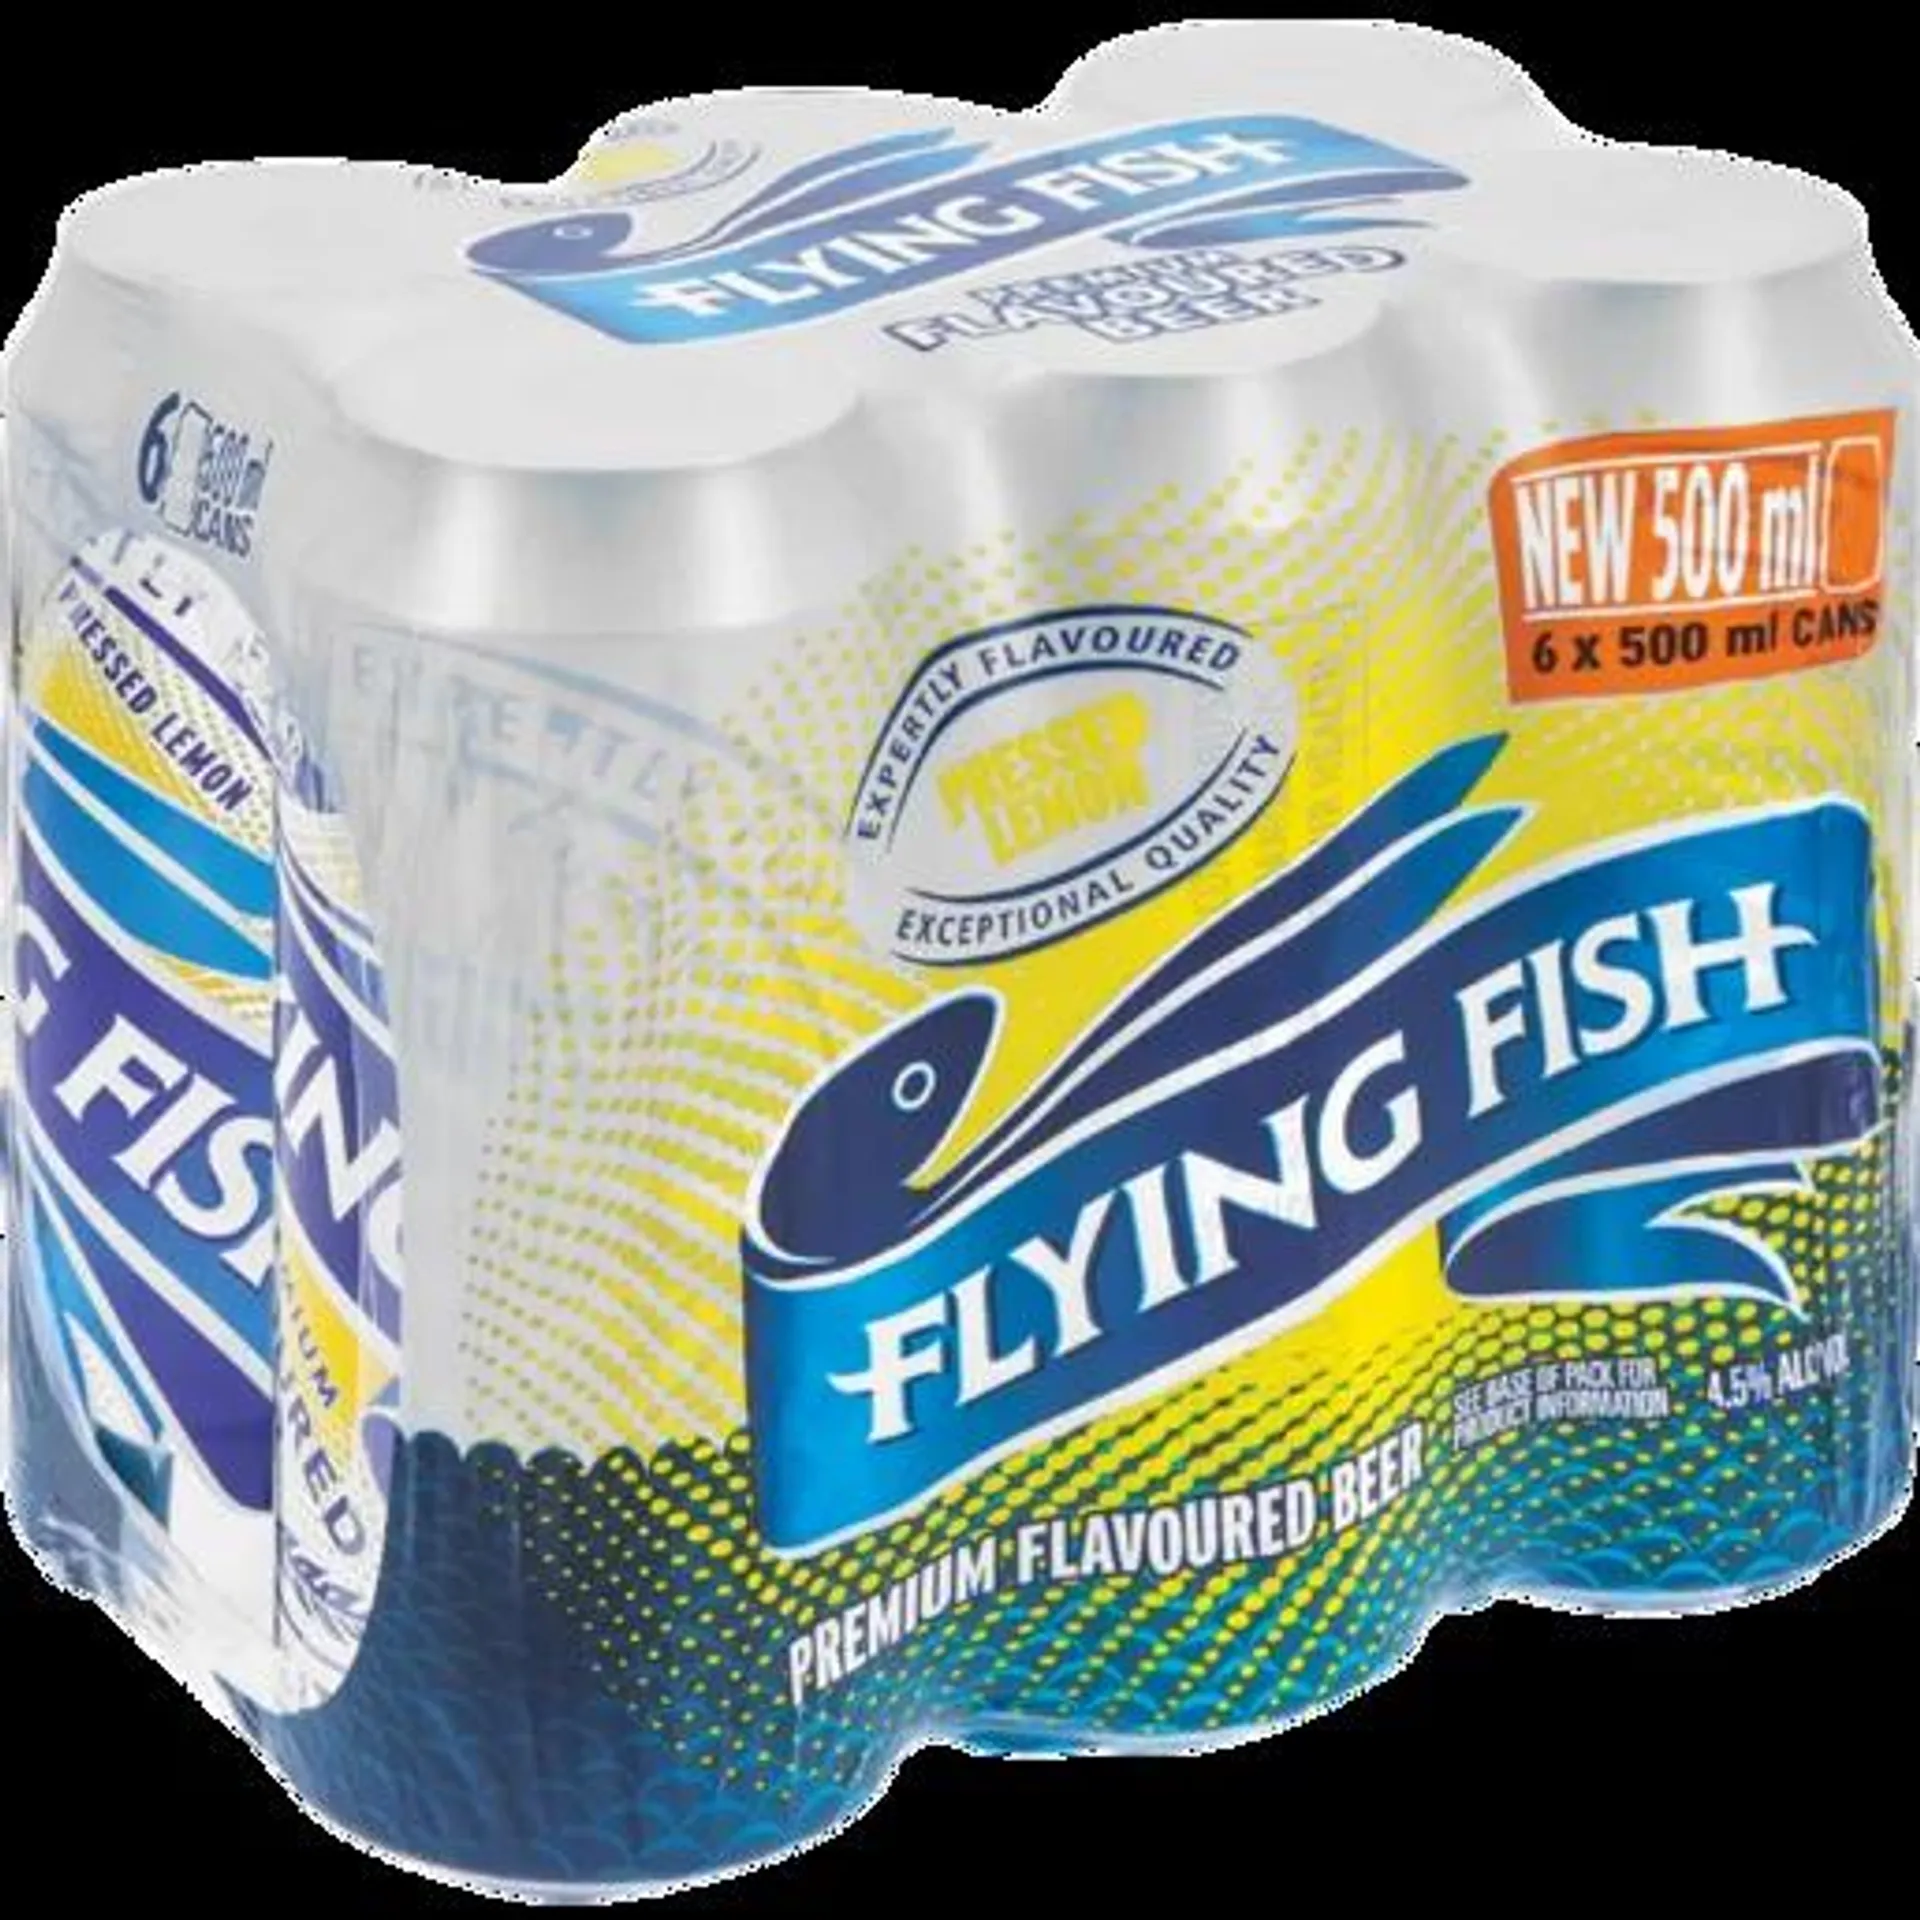 Flying Fish Pressed Lemon Beer Cans 6 x 500ml